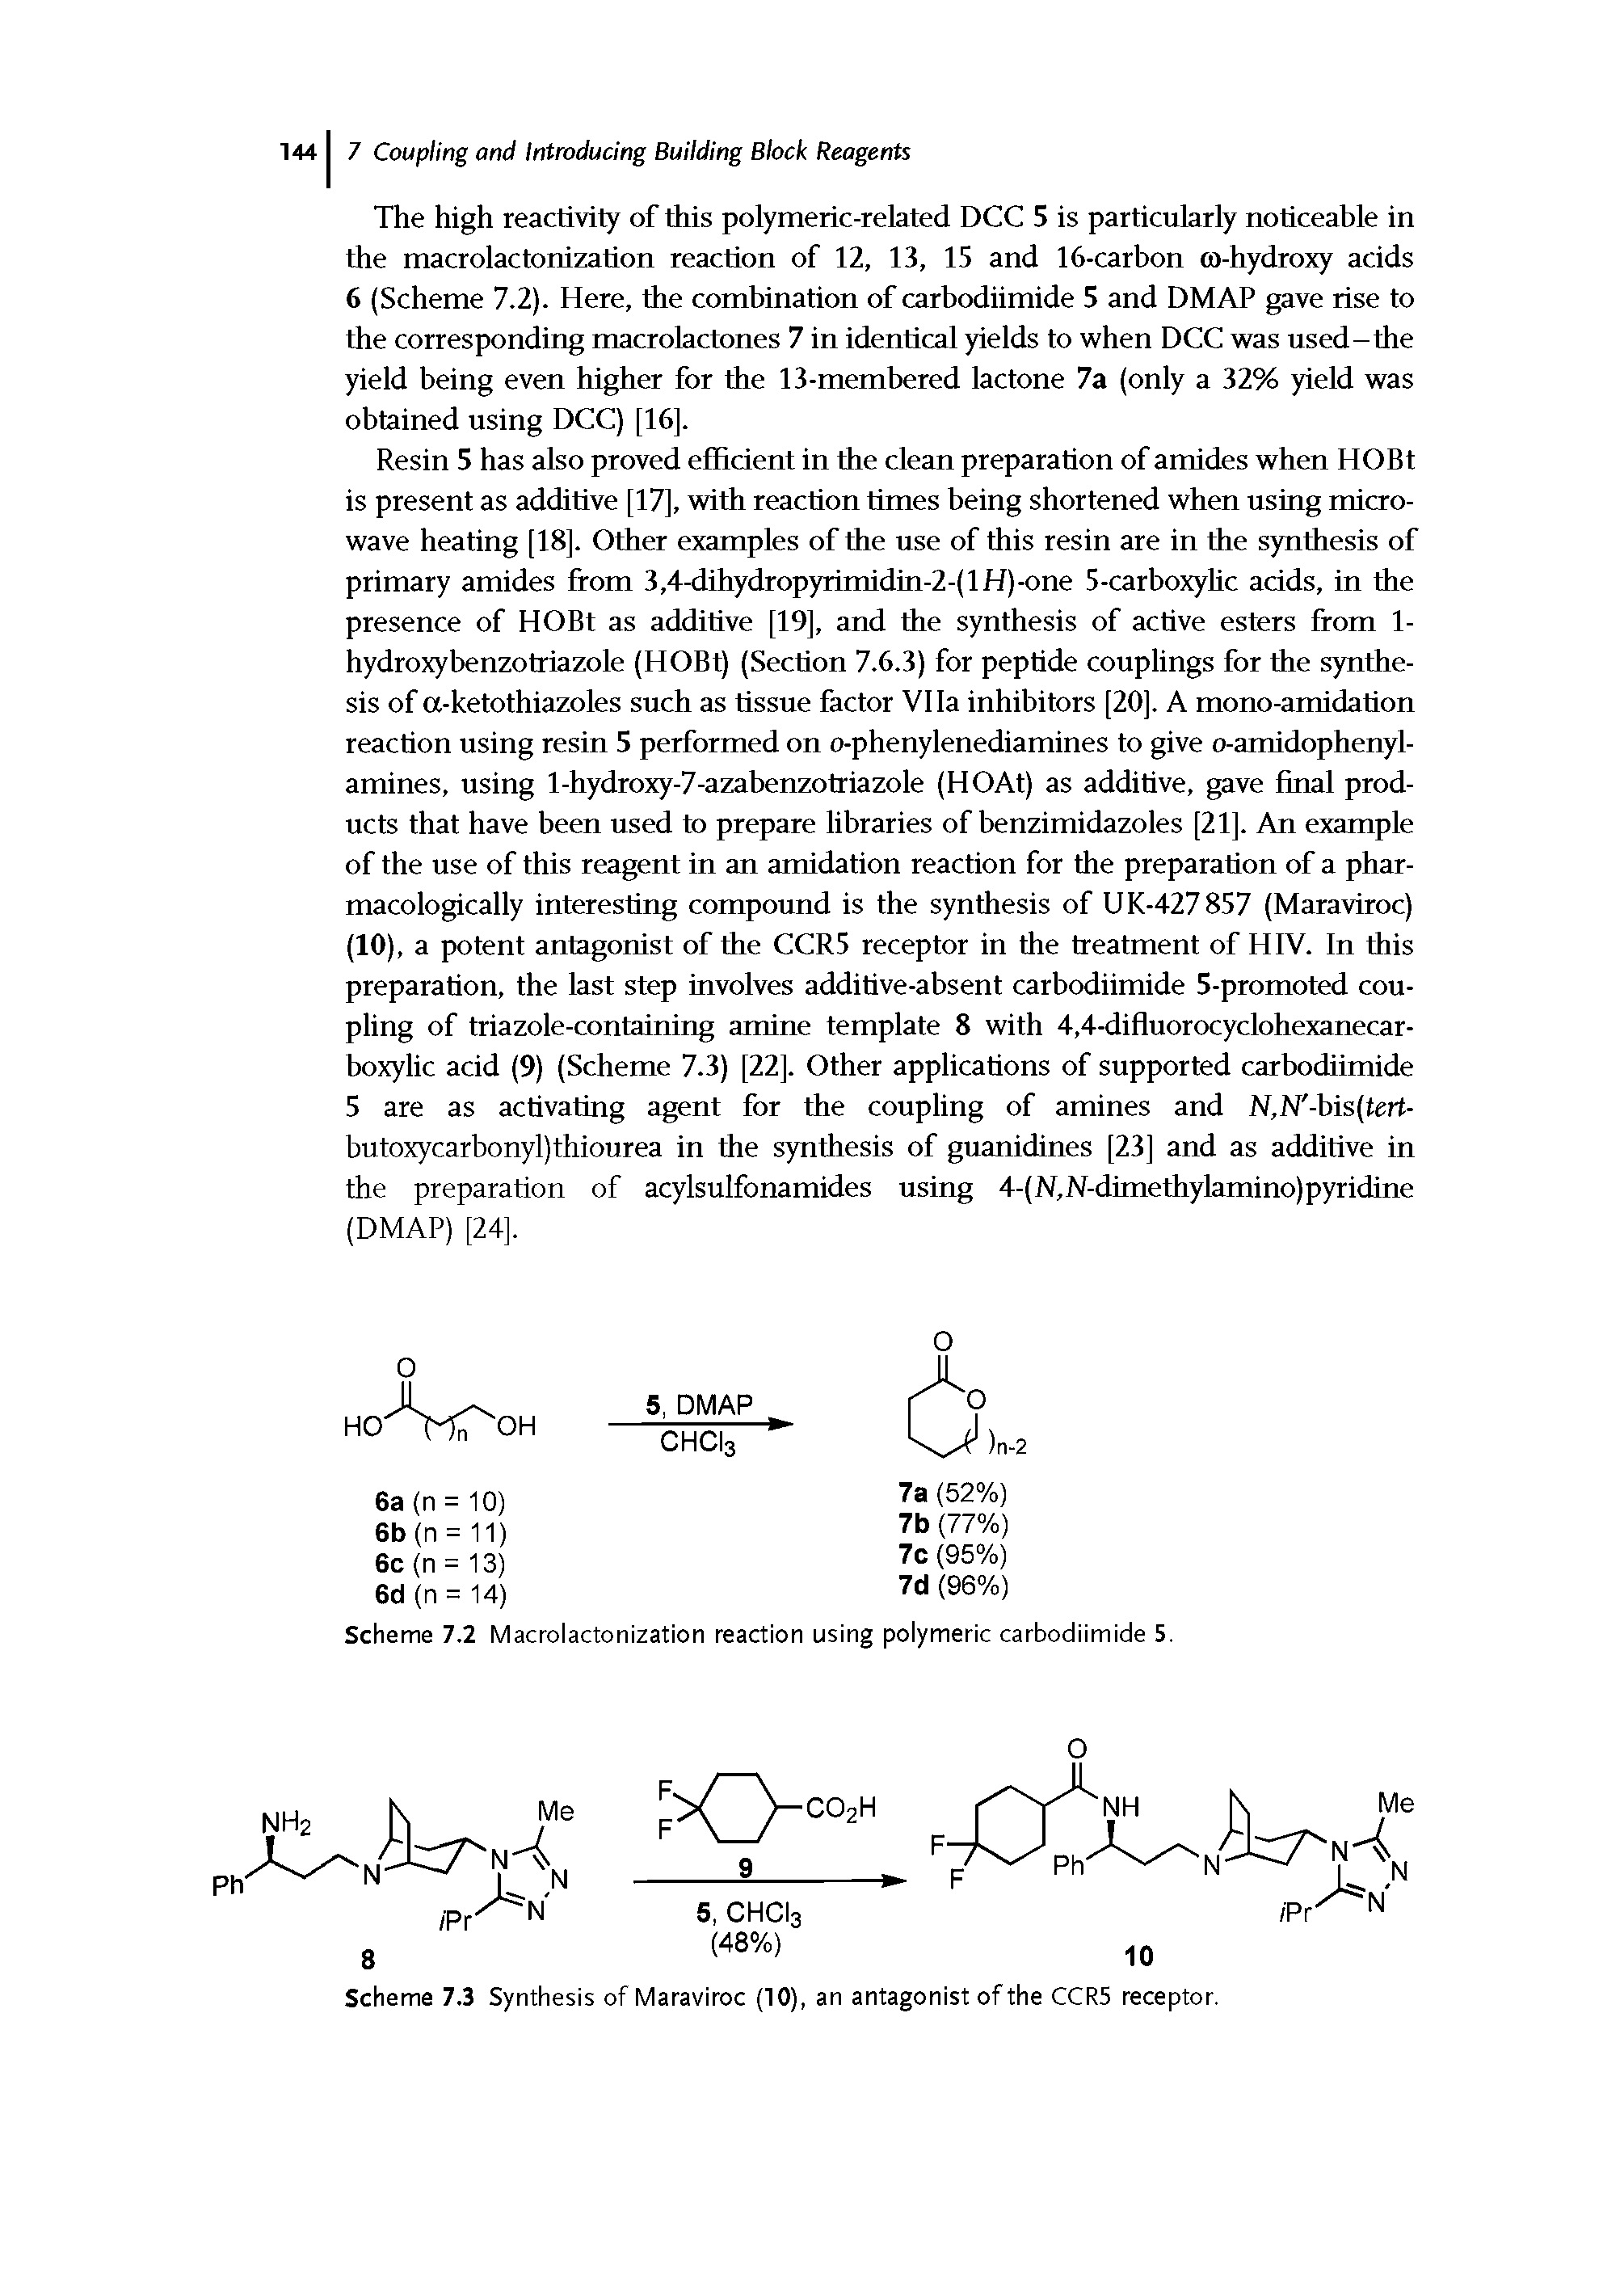 Scheme 7.2 Macrolactonization reaction using polymeric carbodiimide 5.